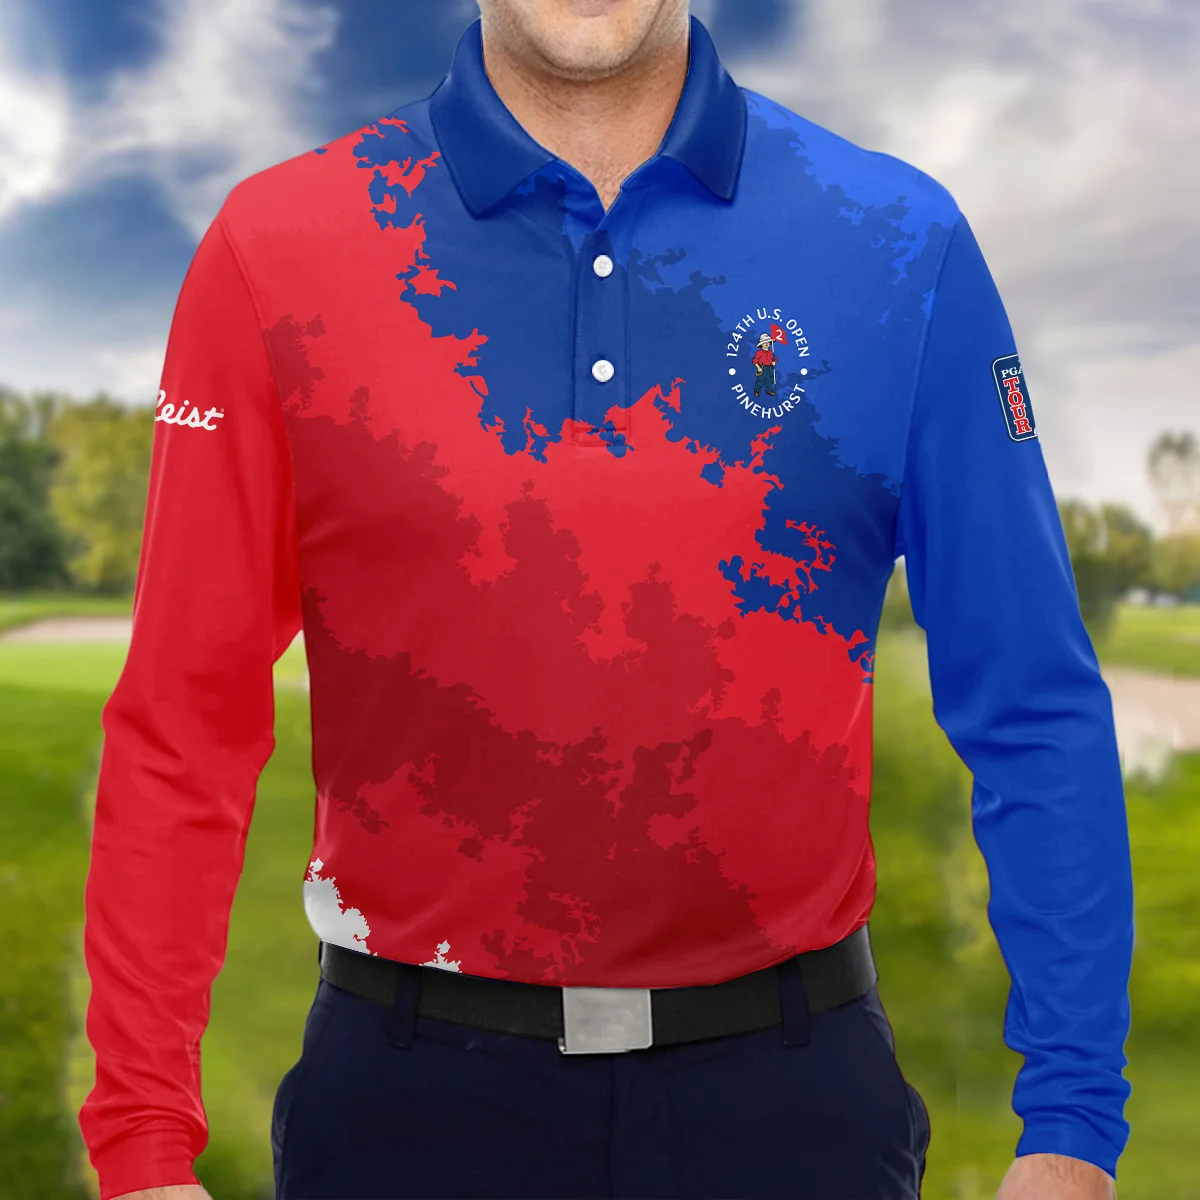 Titleist 124th U.S. Open Pinehurst Blue Red White Background Polo Shirt Style Classic